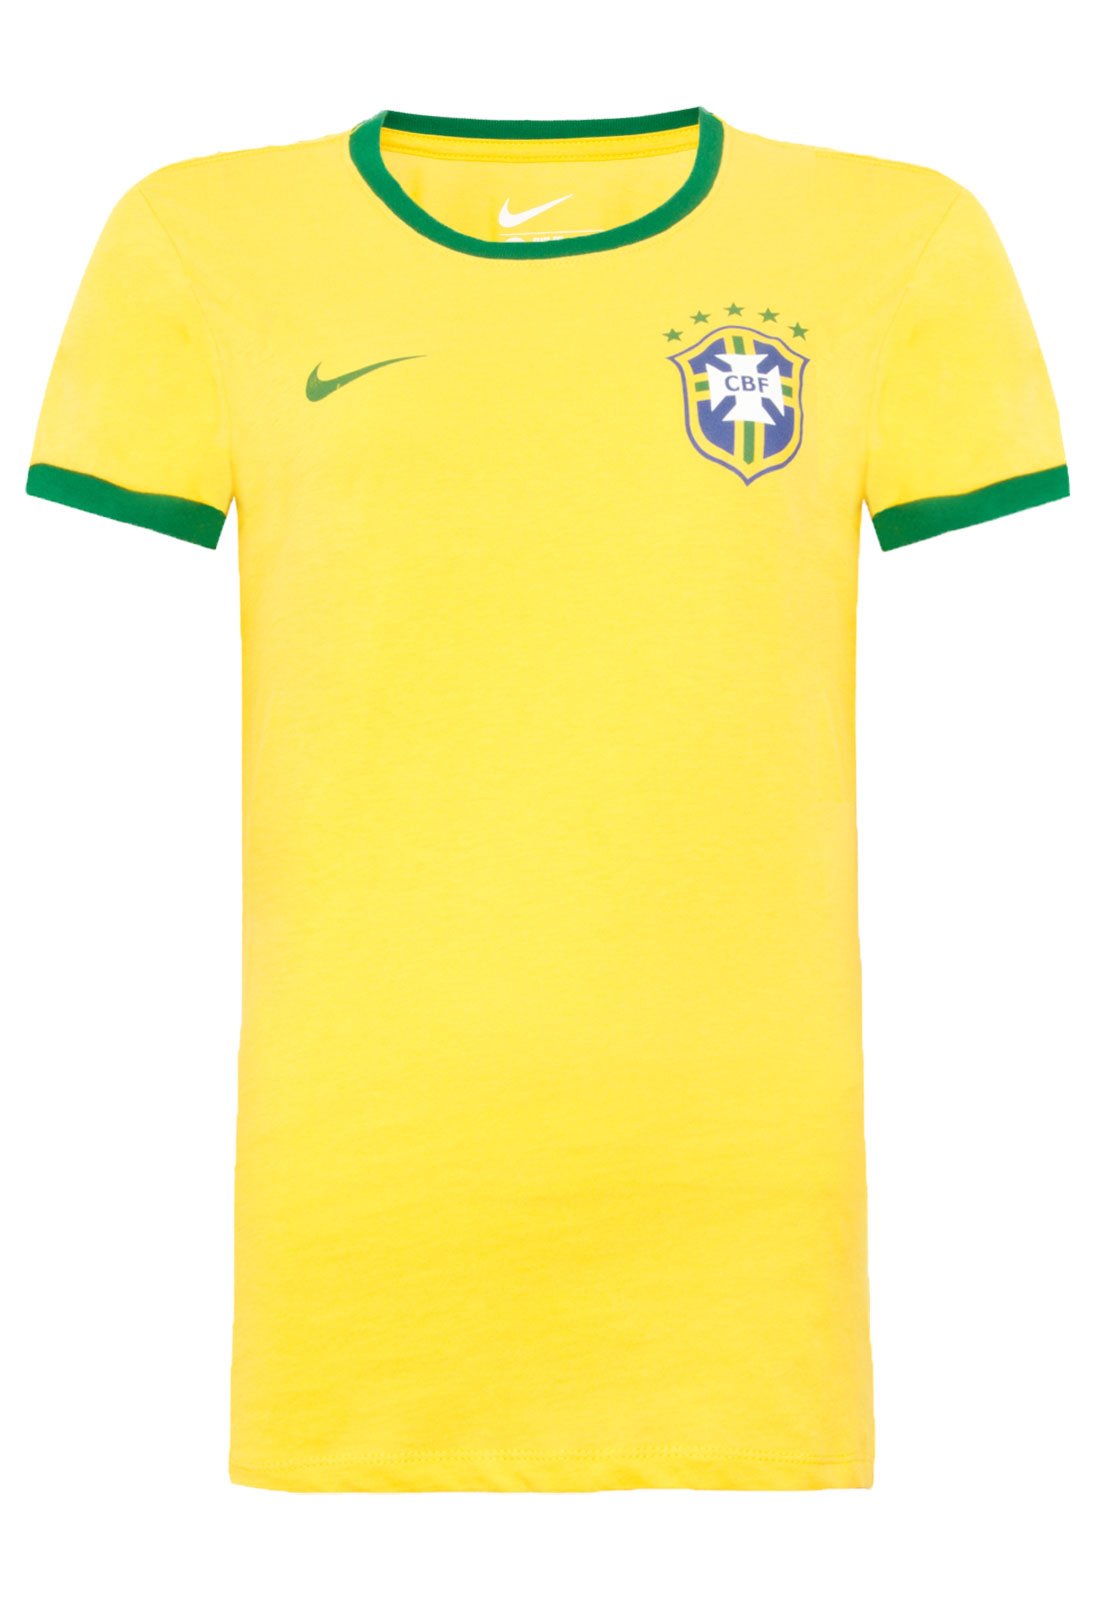 Persona Villain In most cases Camisa Nike Brasil Feminina Amarela - Compre Agora | Kanui Brasil